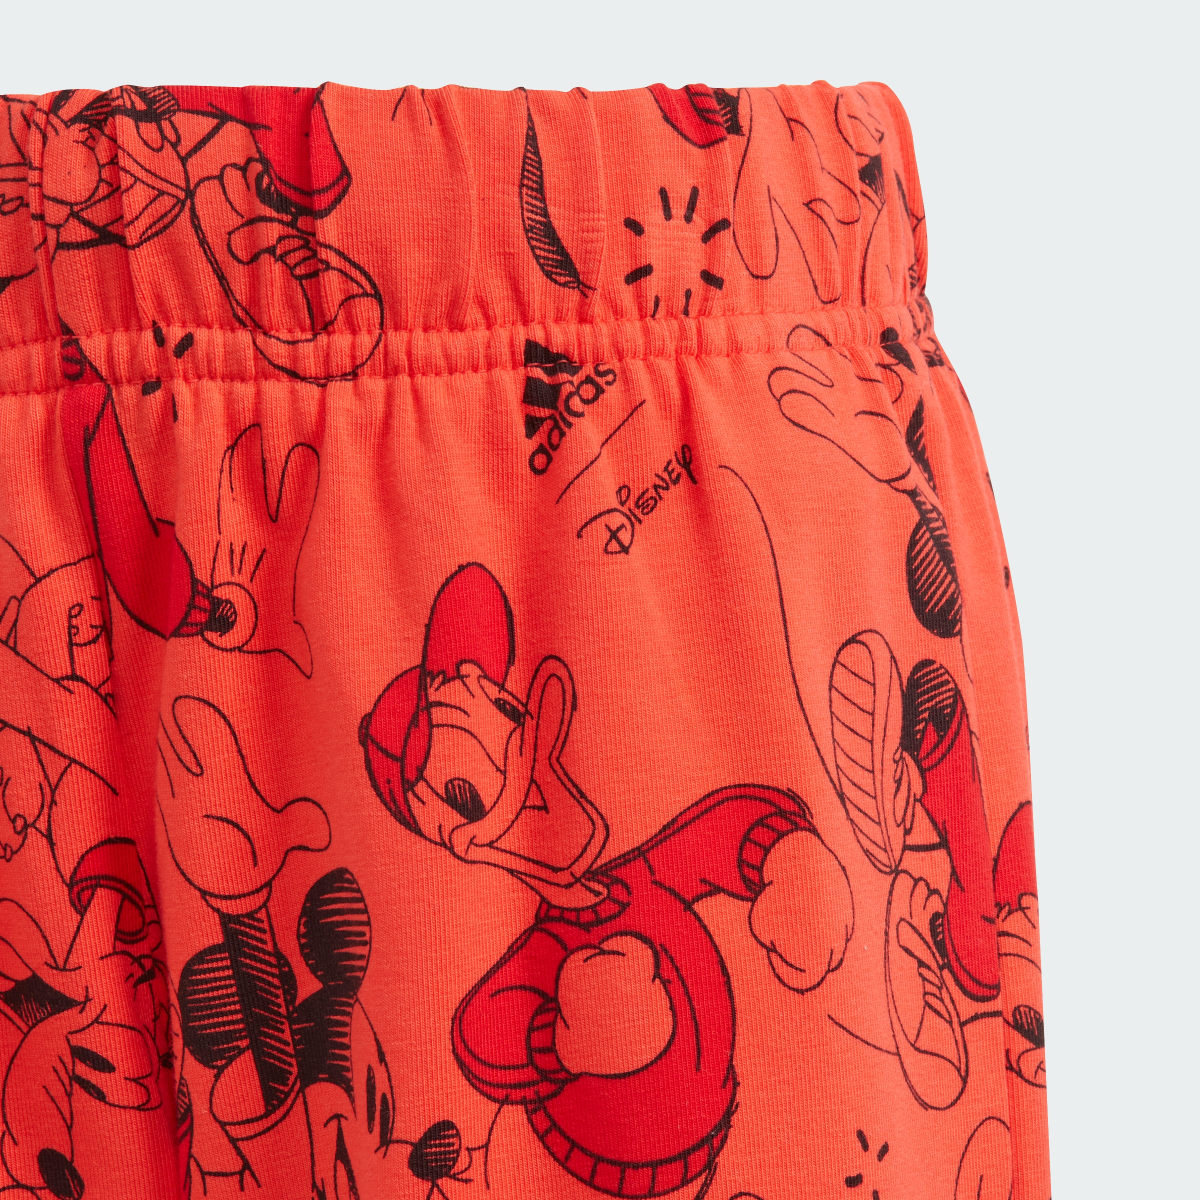 Adidas Completo adidas x Disney Mickey Mouse Tee. 9